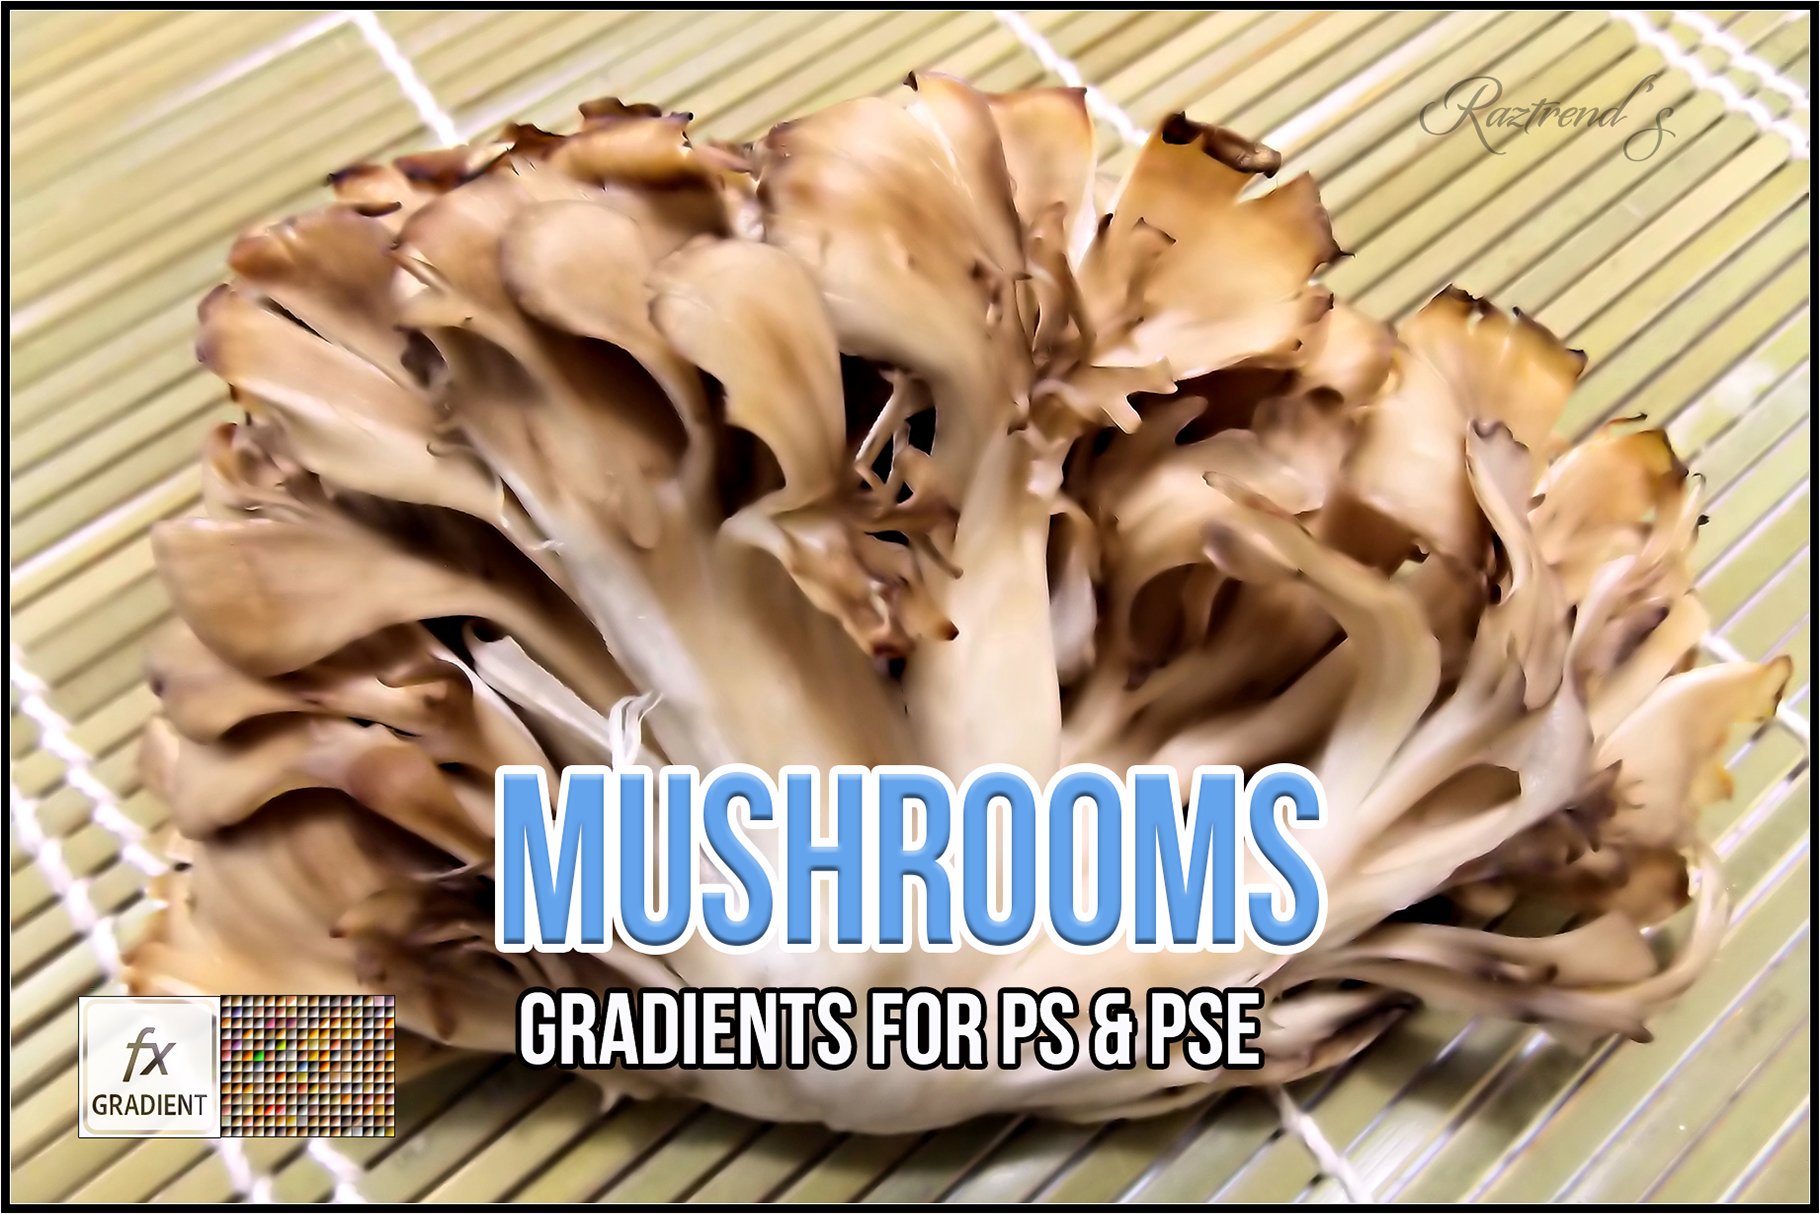 Mushrooms Gradientscover image.